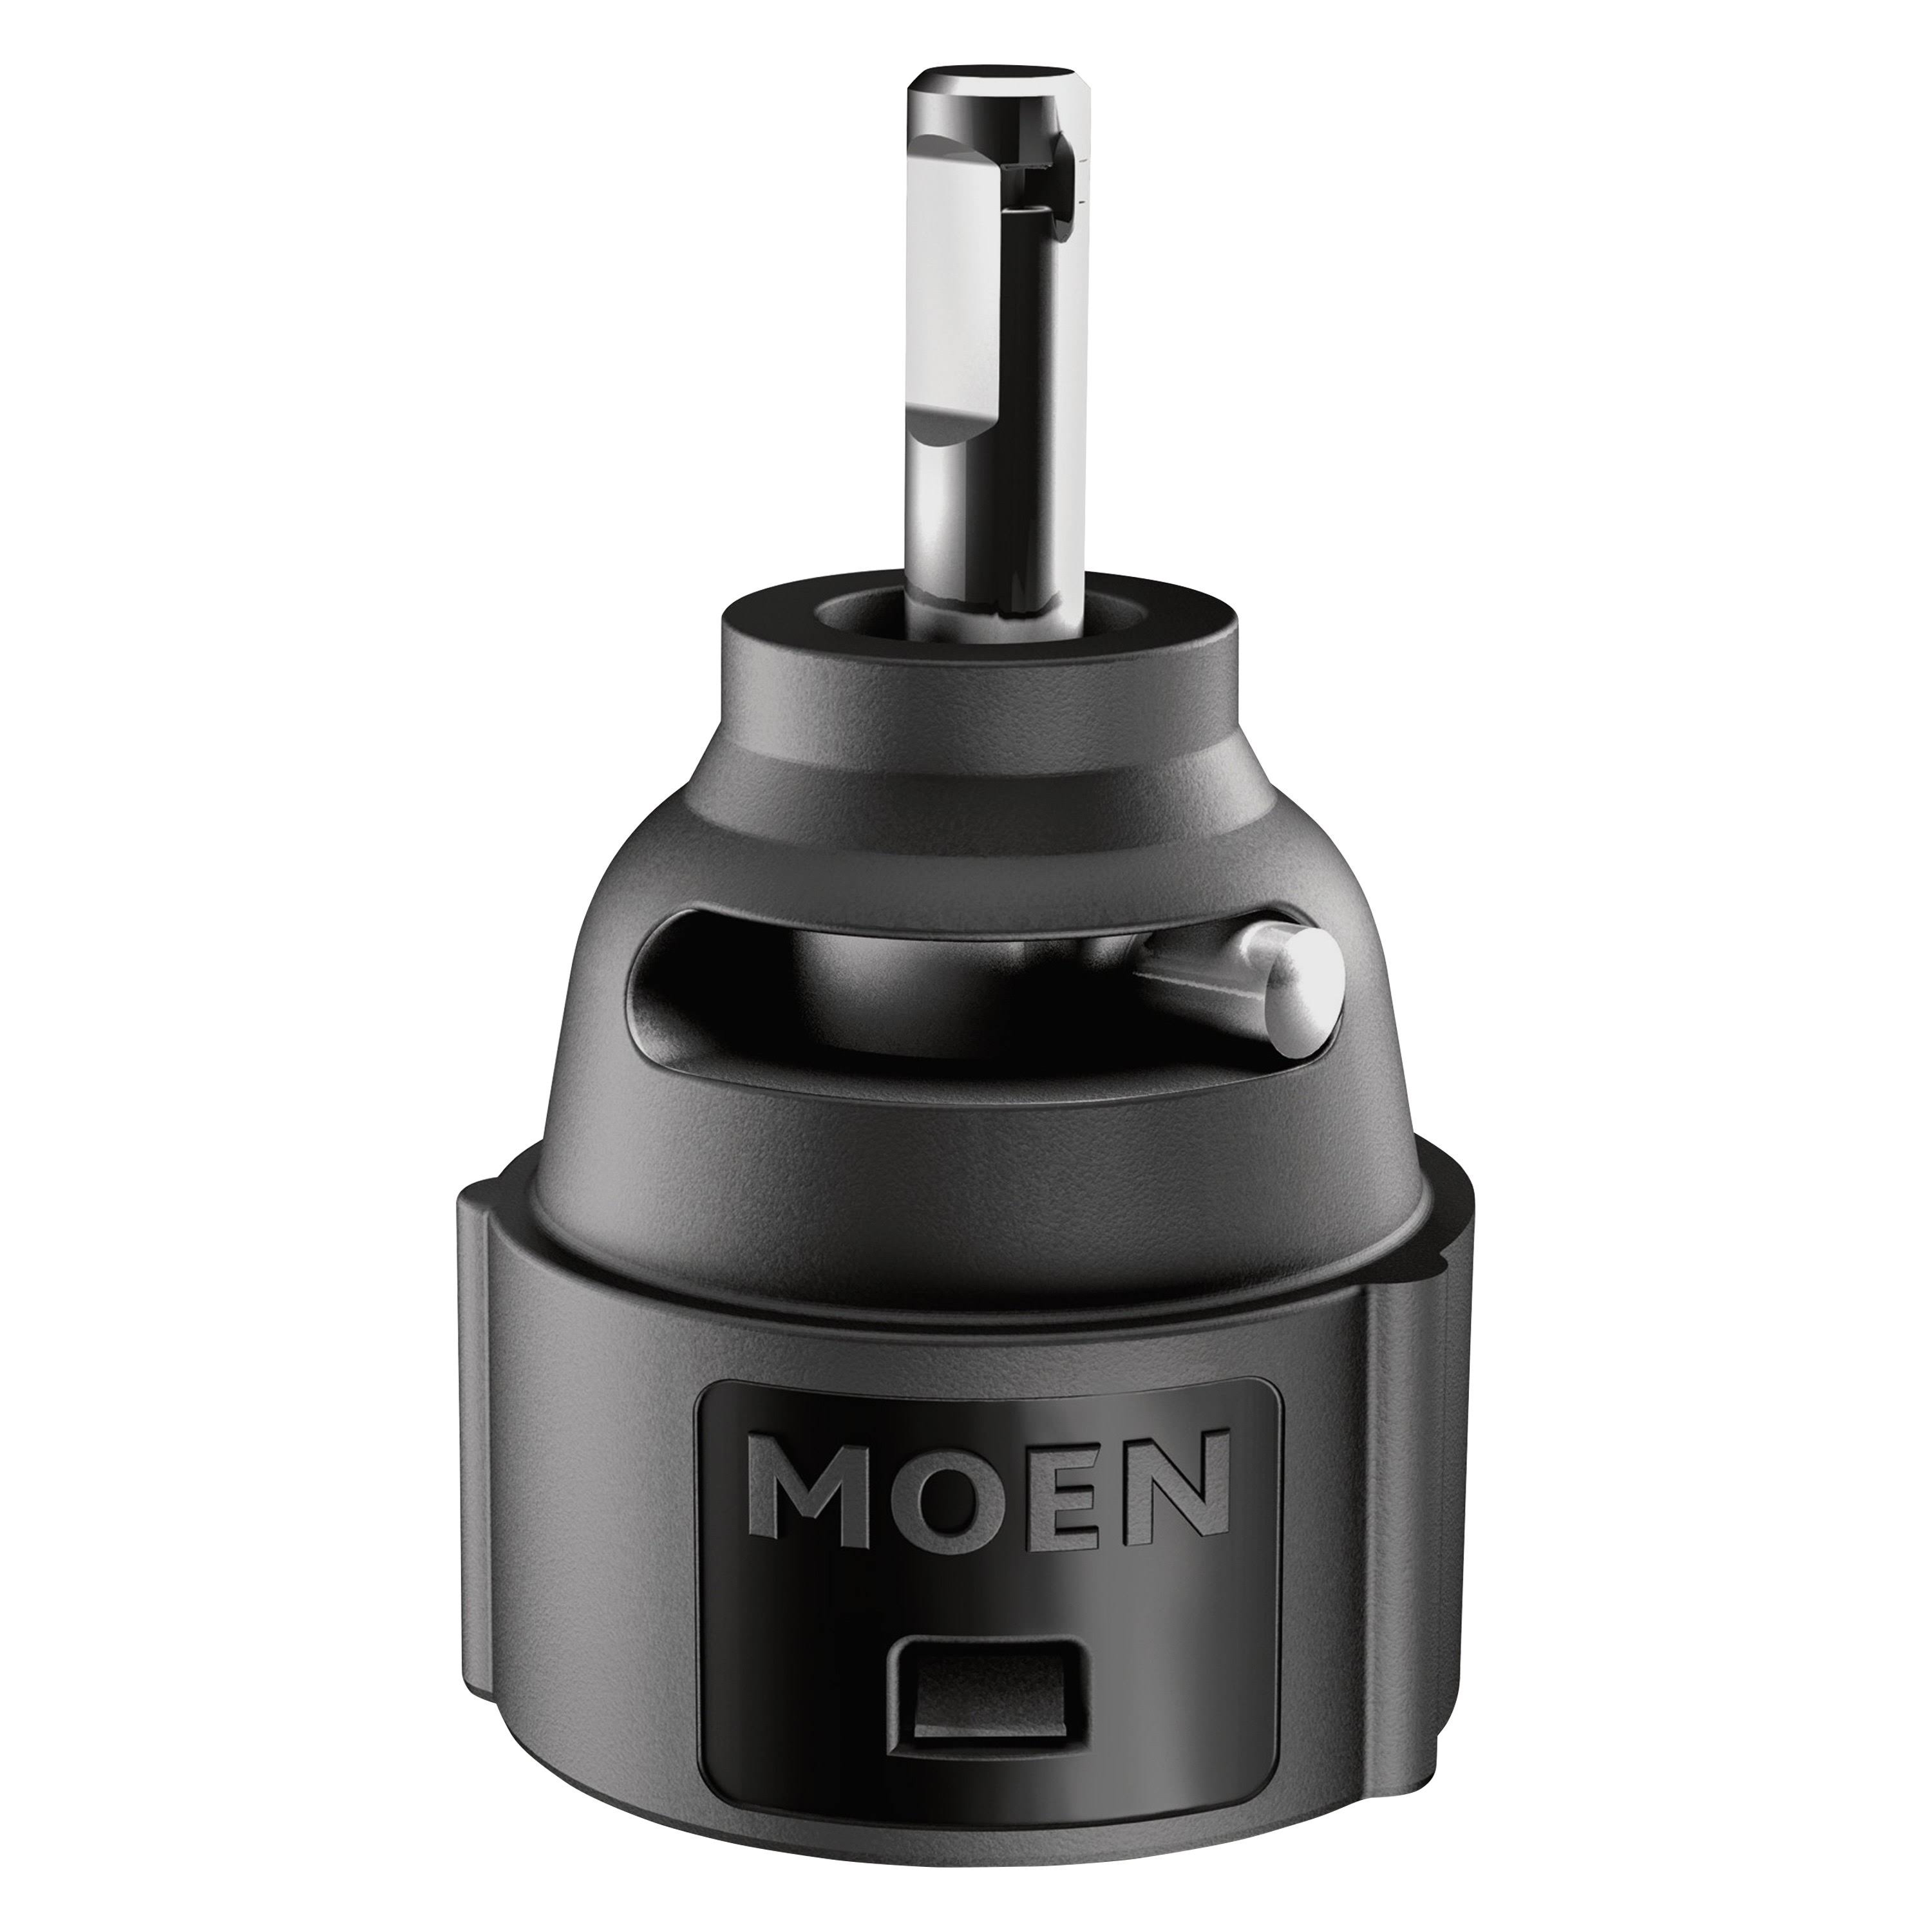 Moen 1255 Lead Free Single Handle Replacement Cartridge